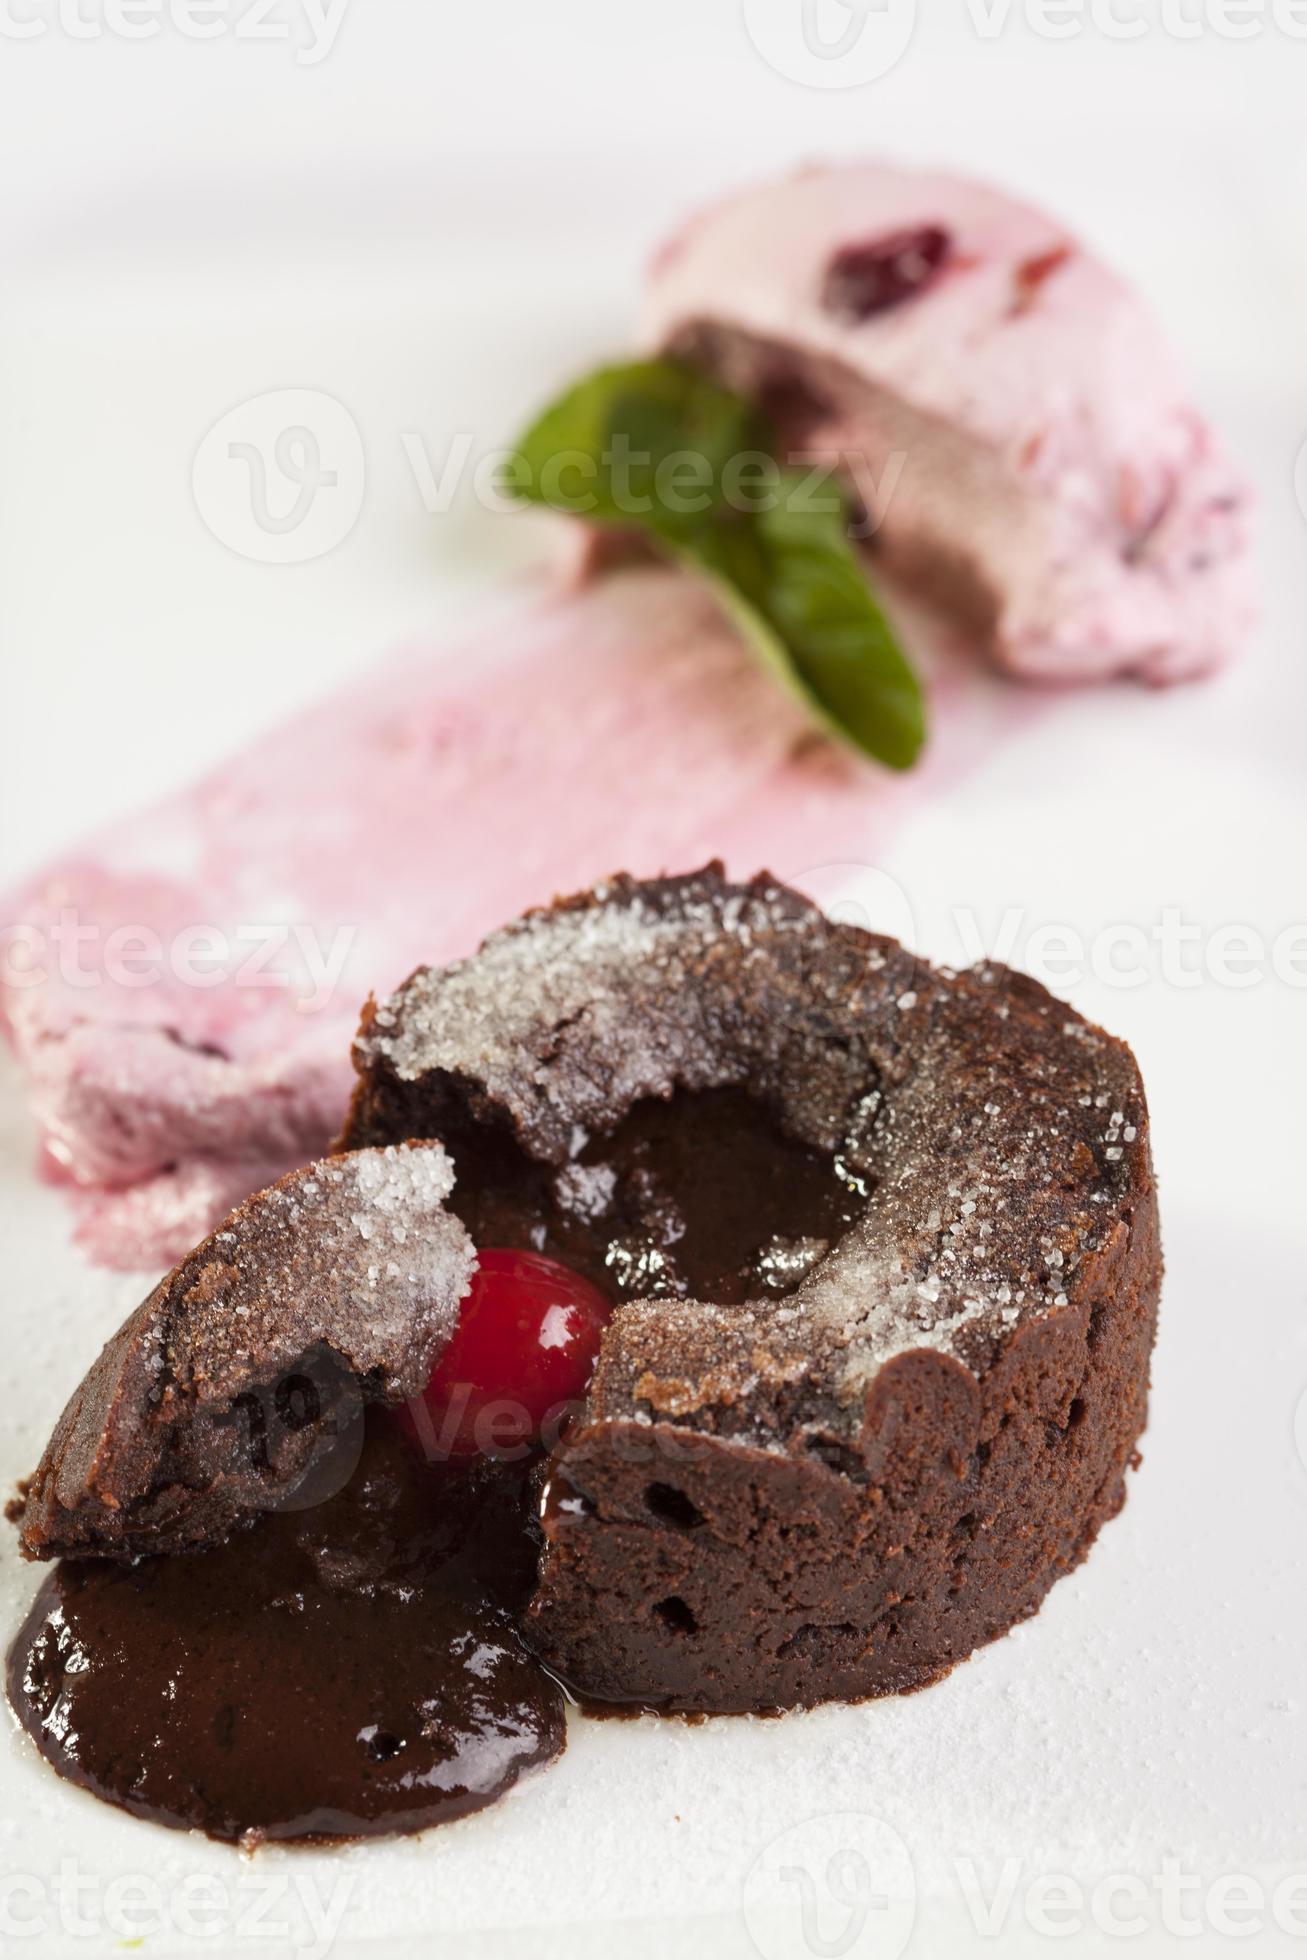 chocolate soufflé with ice cream photo